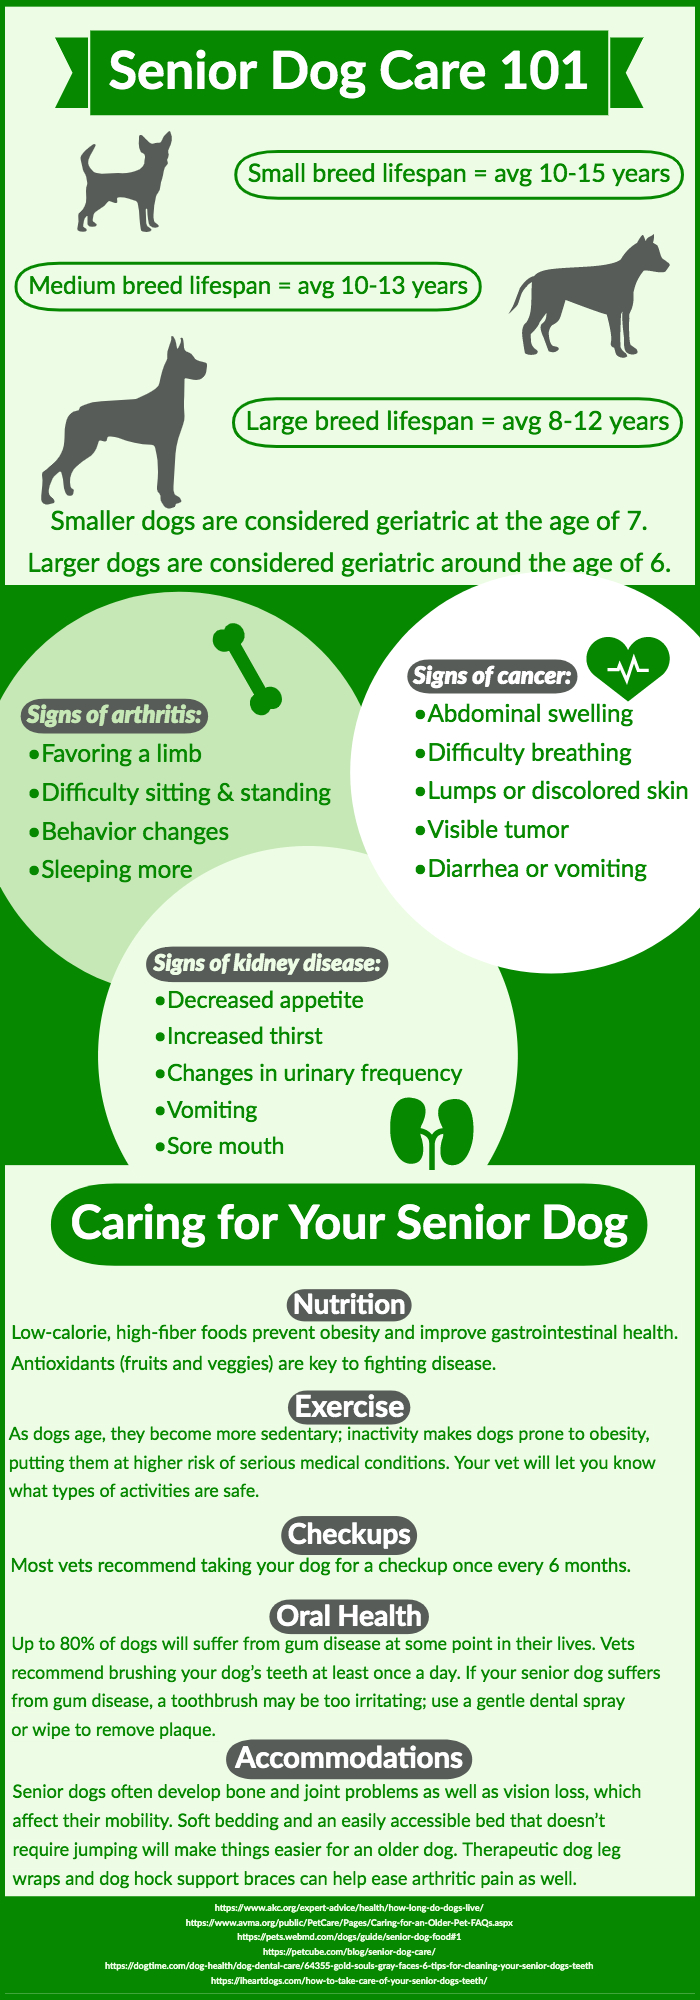 Senior Dog Care 101